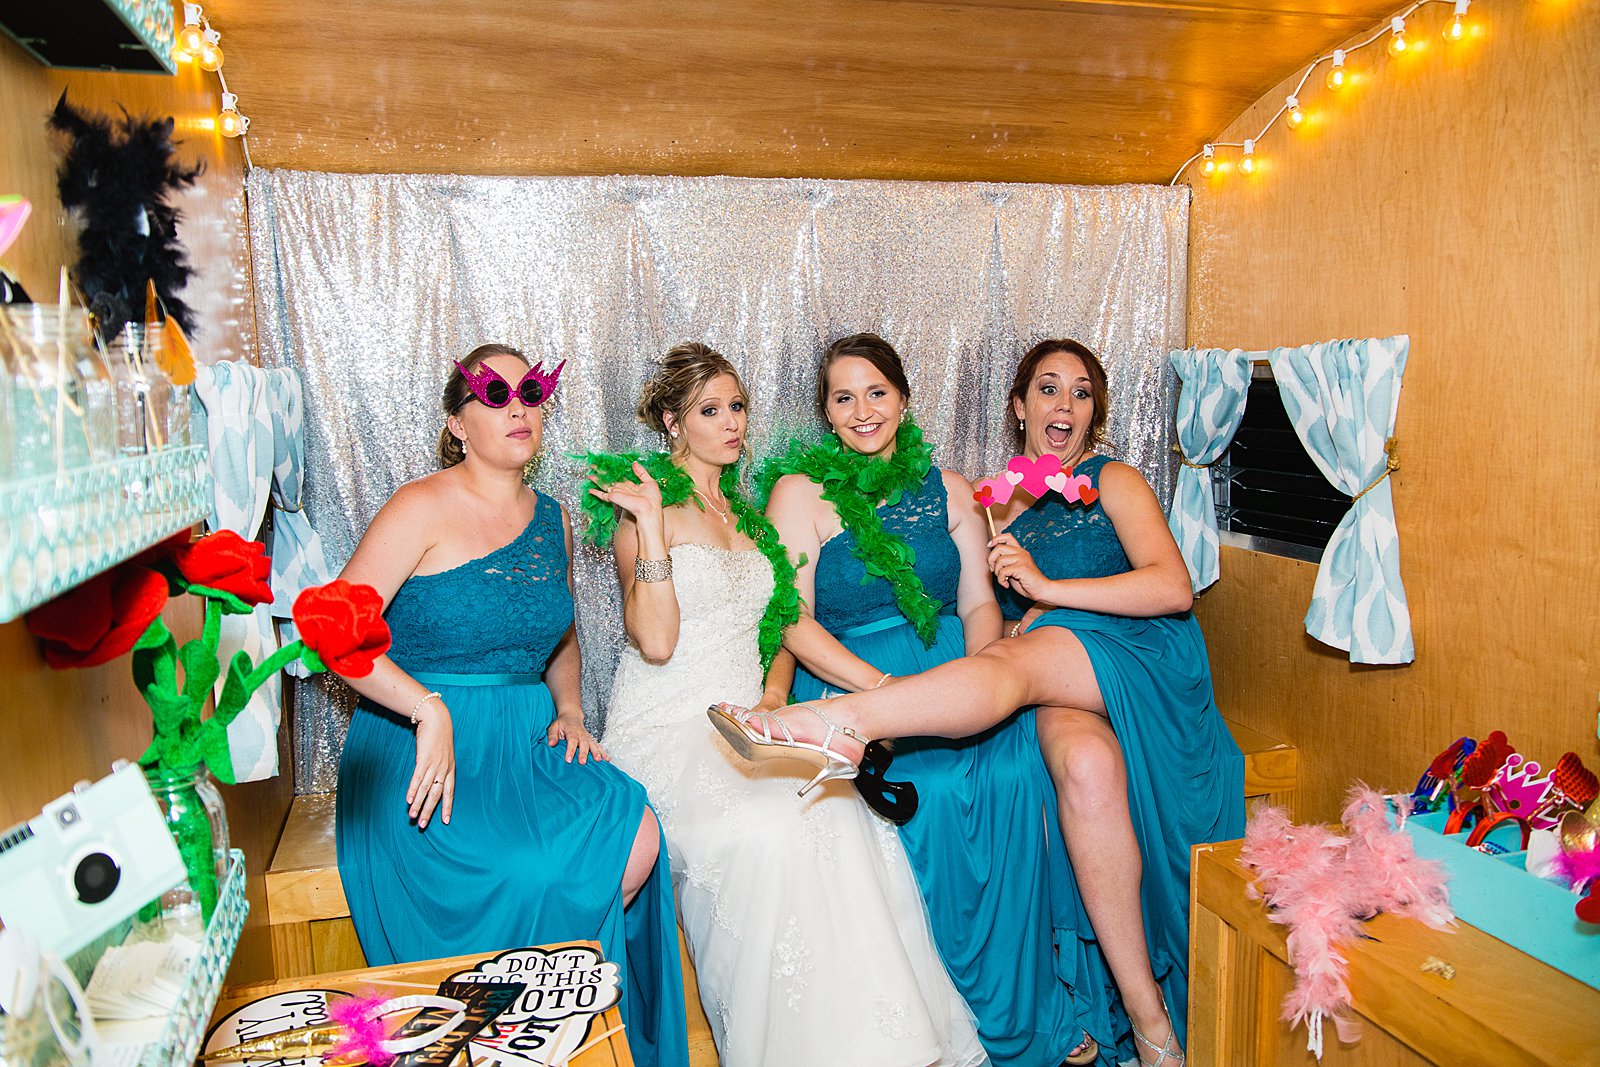 Trailer Trash wedding reception photo booth by PMA Photography.